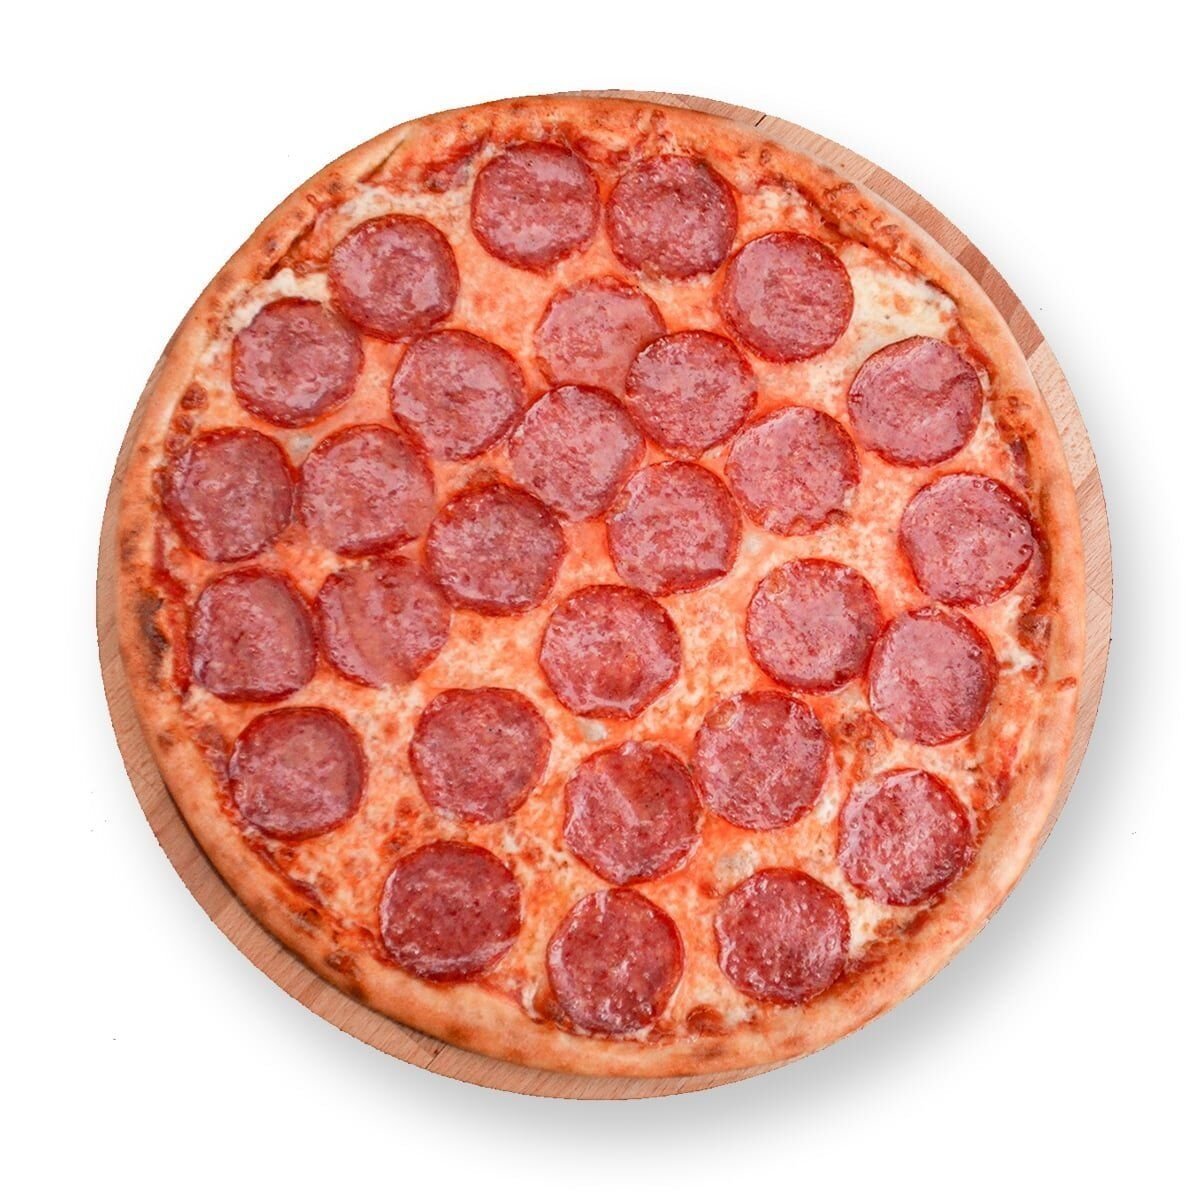 что означает пепперони в пицце фото 69